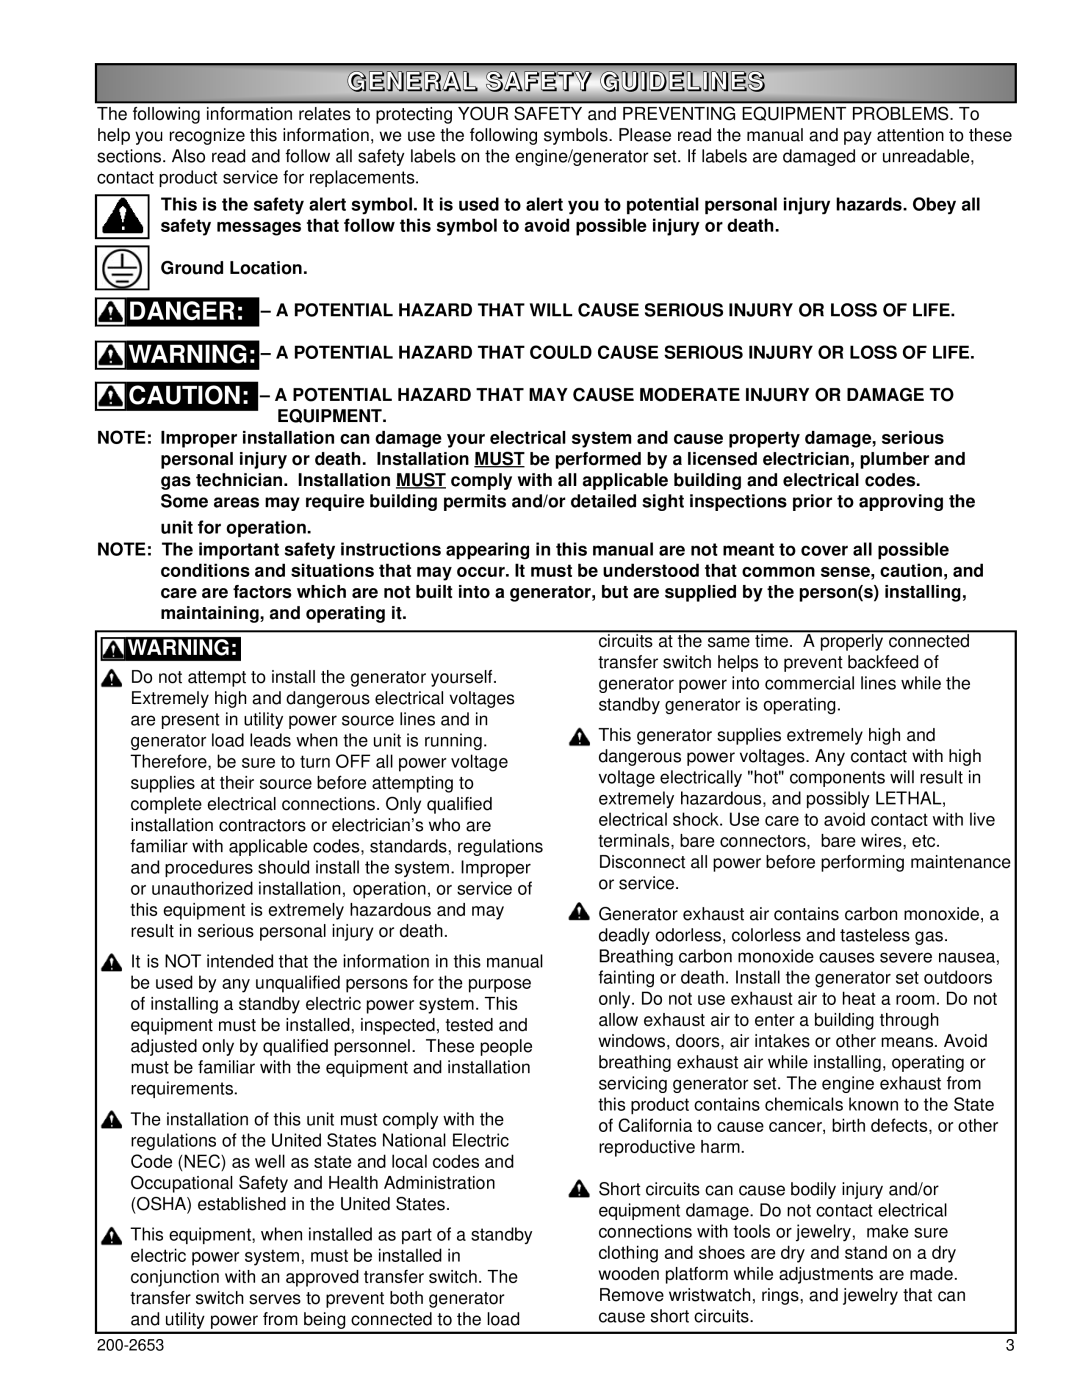 Powermate P3201, P2201, P2701 owner manual General Safety Guidelines 